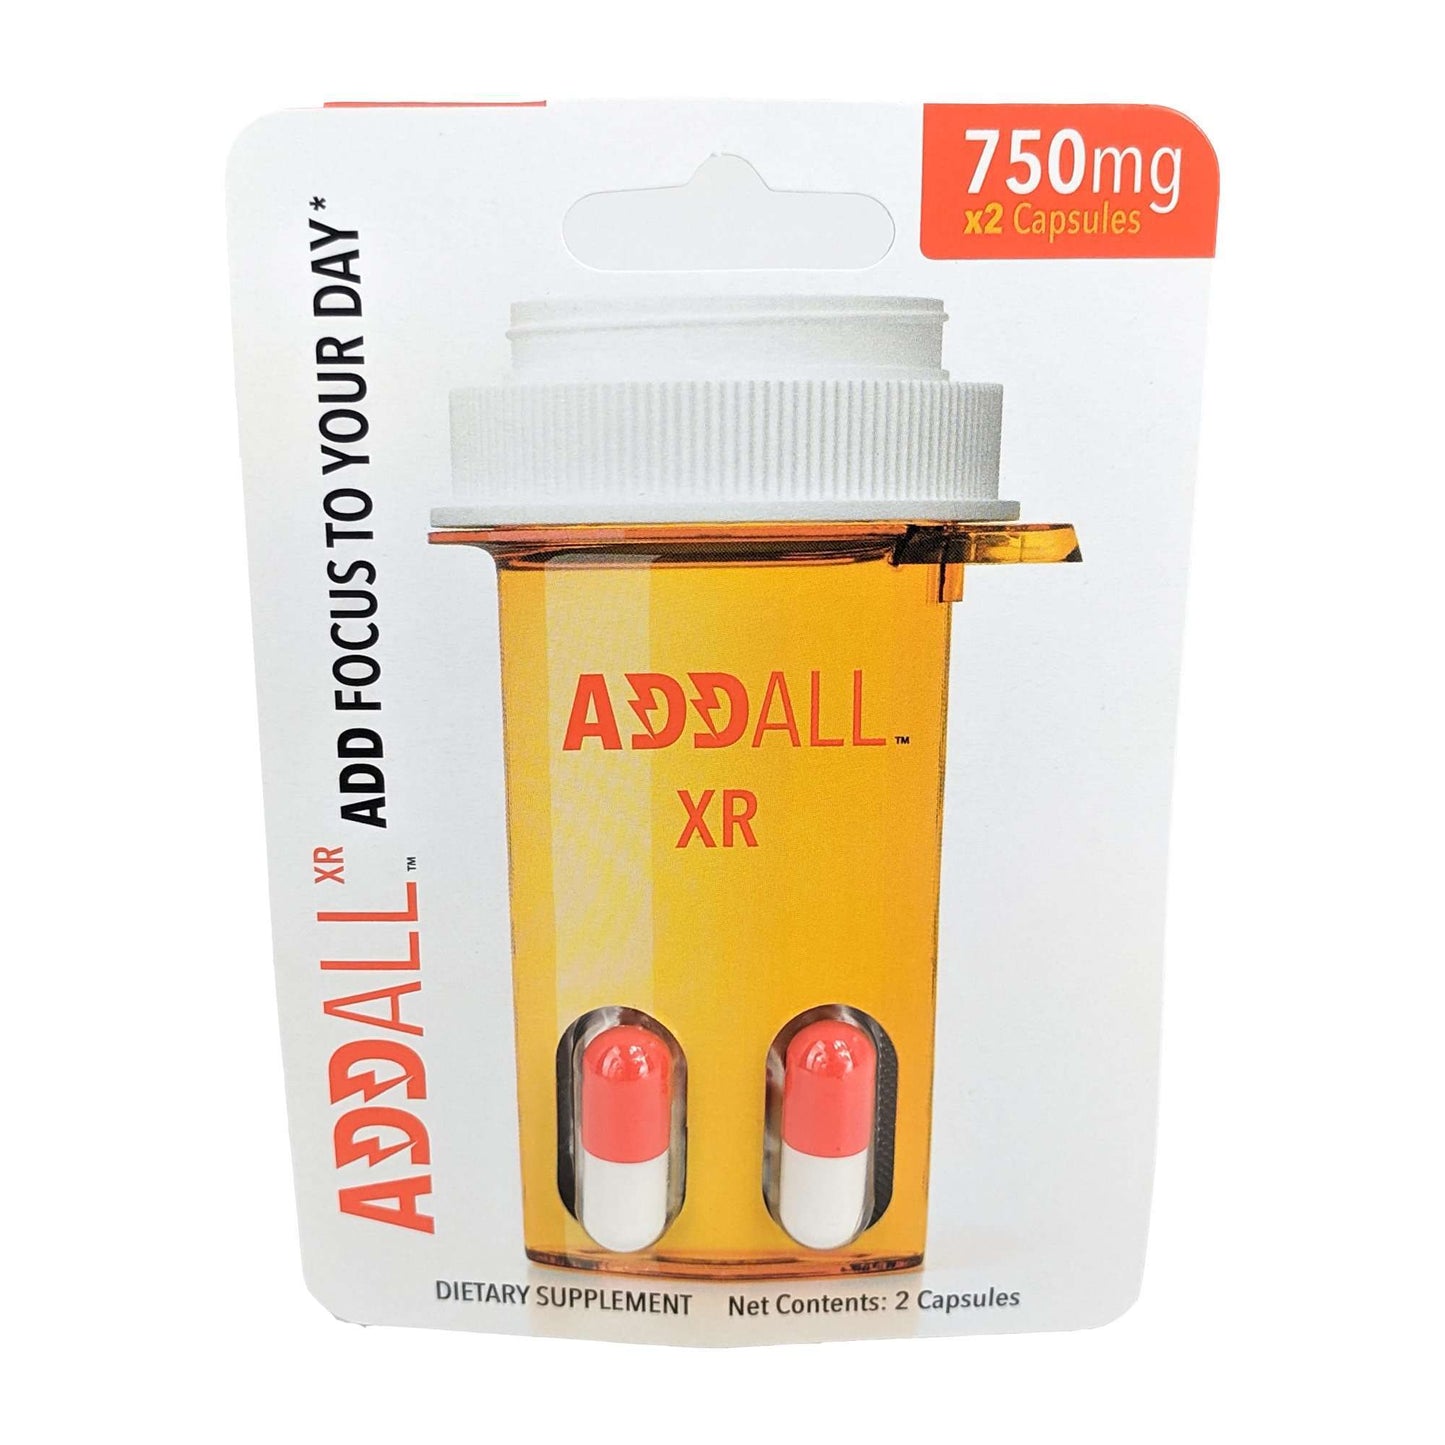 AddAll XR Capsules 750mg Energy & Focus Supplement, 2-Capsule Pack